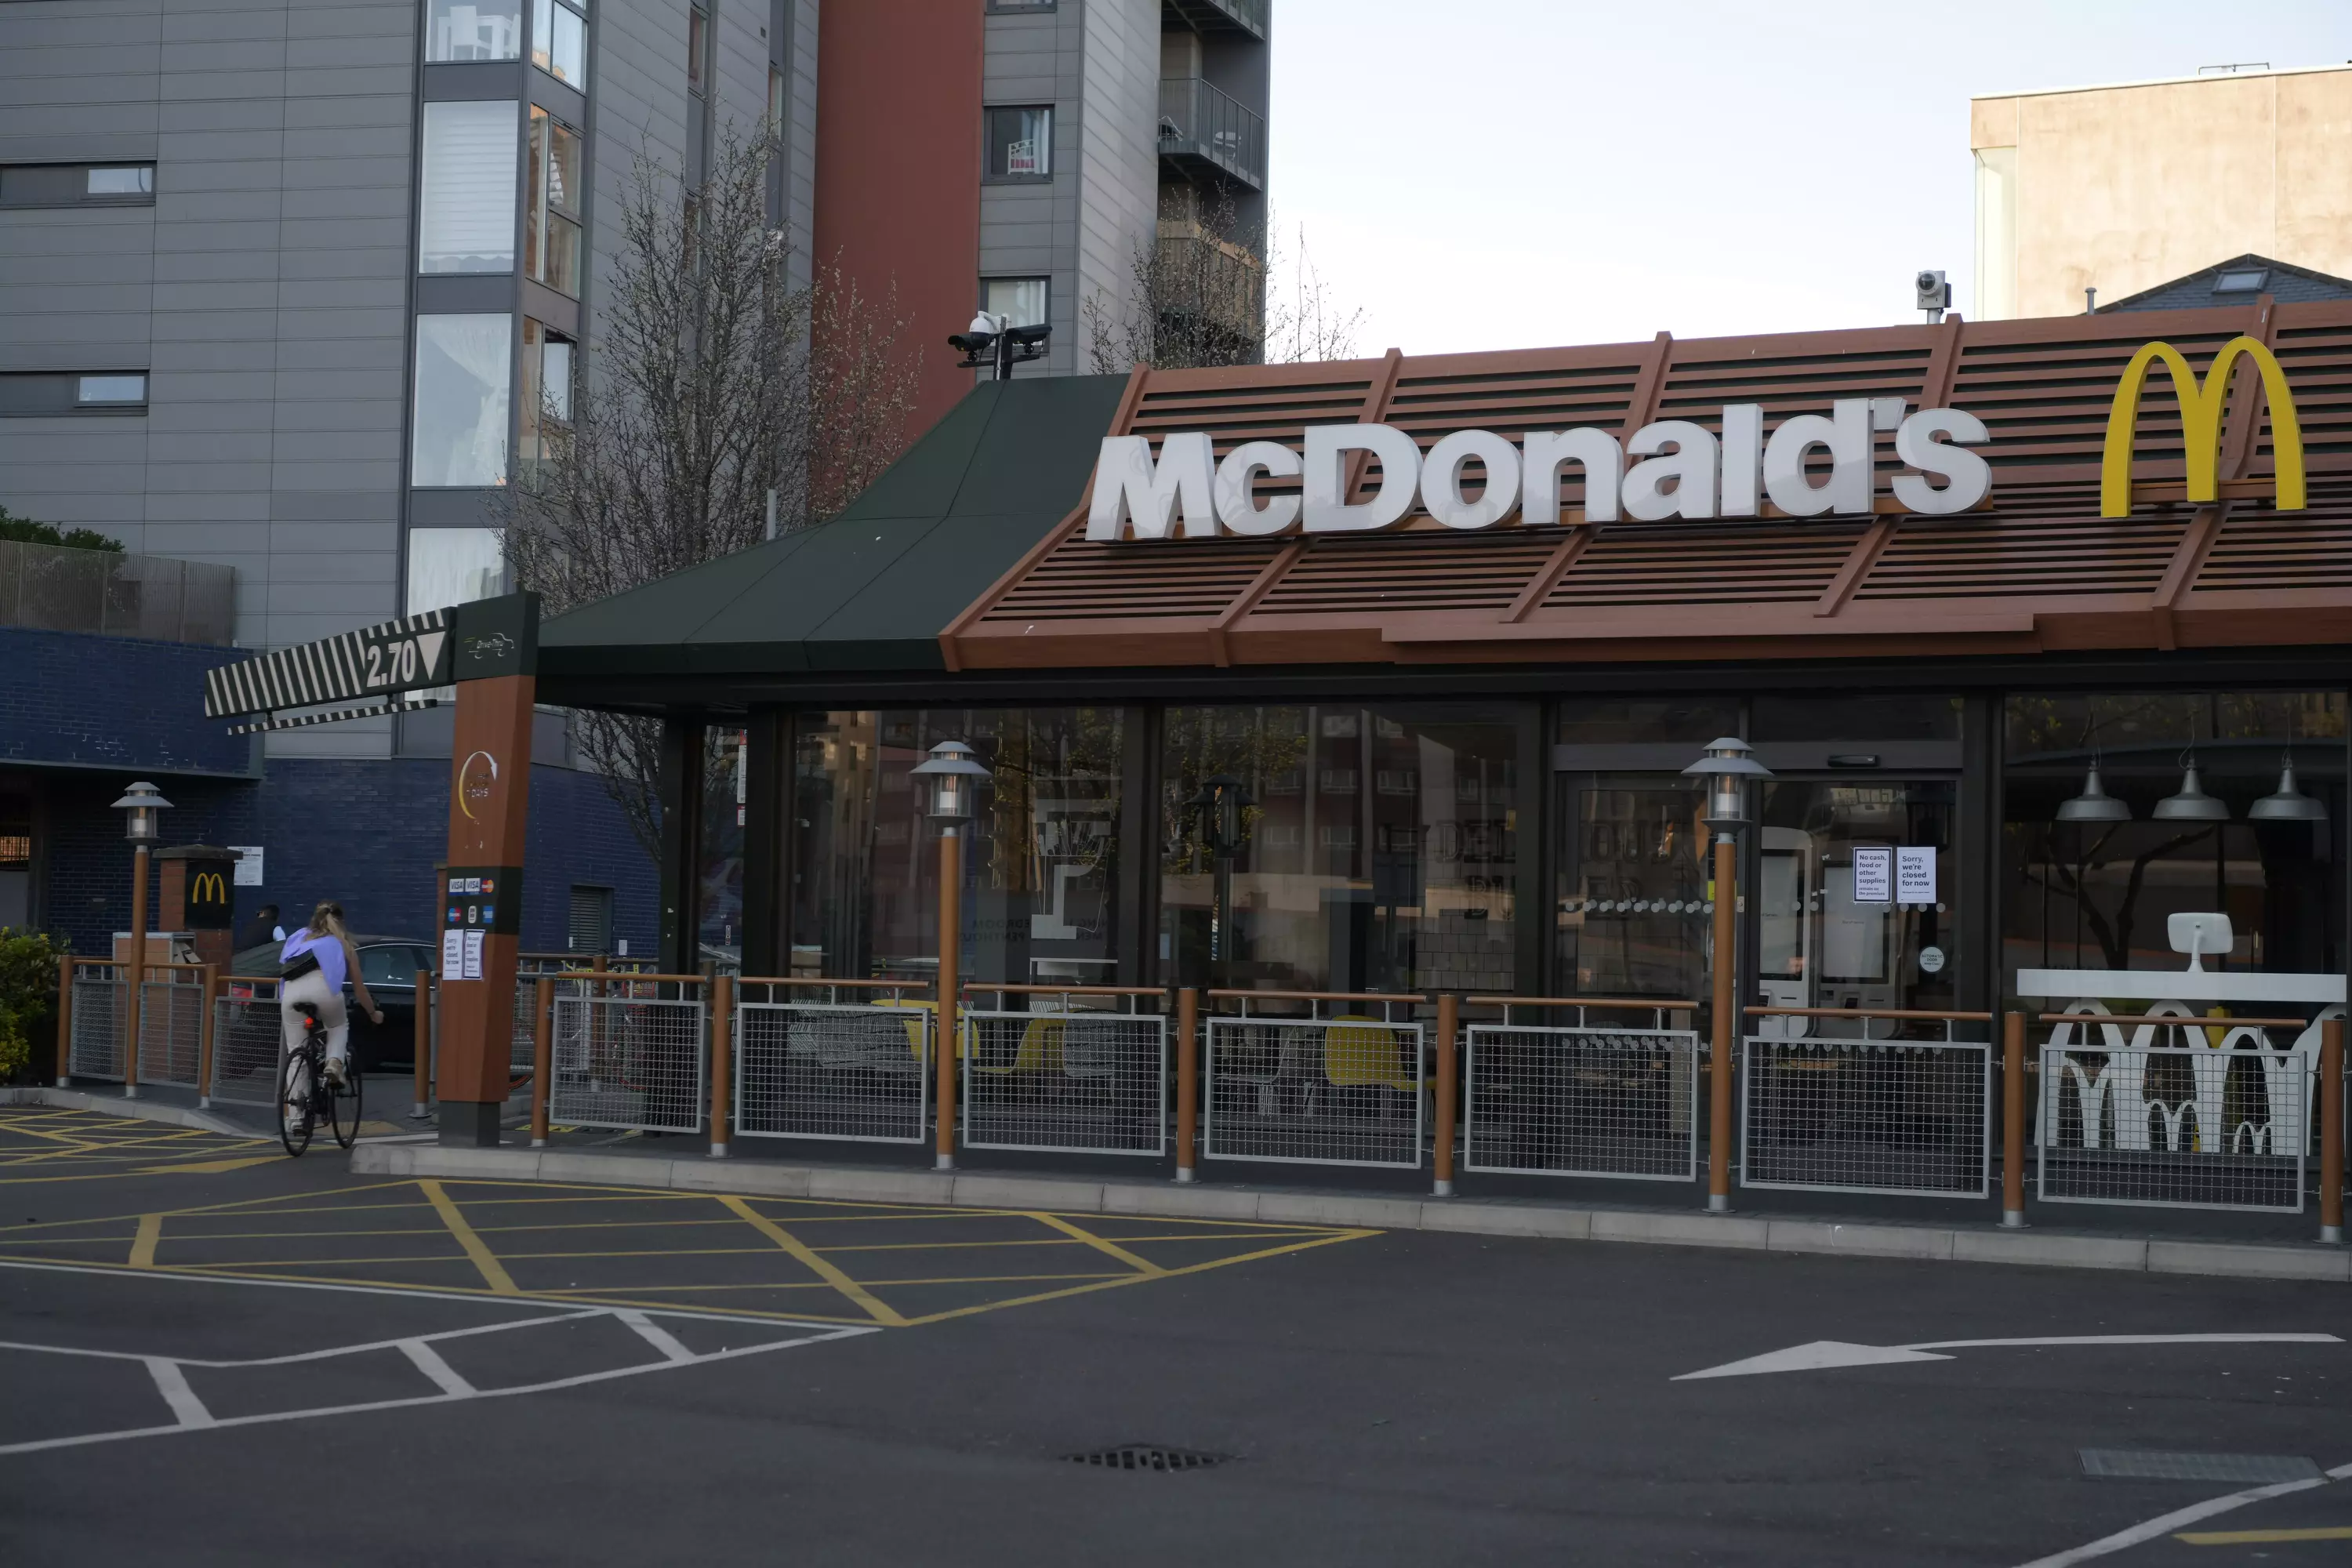 McDonald's restaurants in the UK have closed their doors during lockdown.